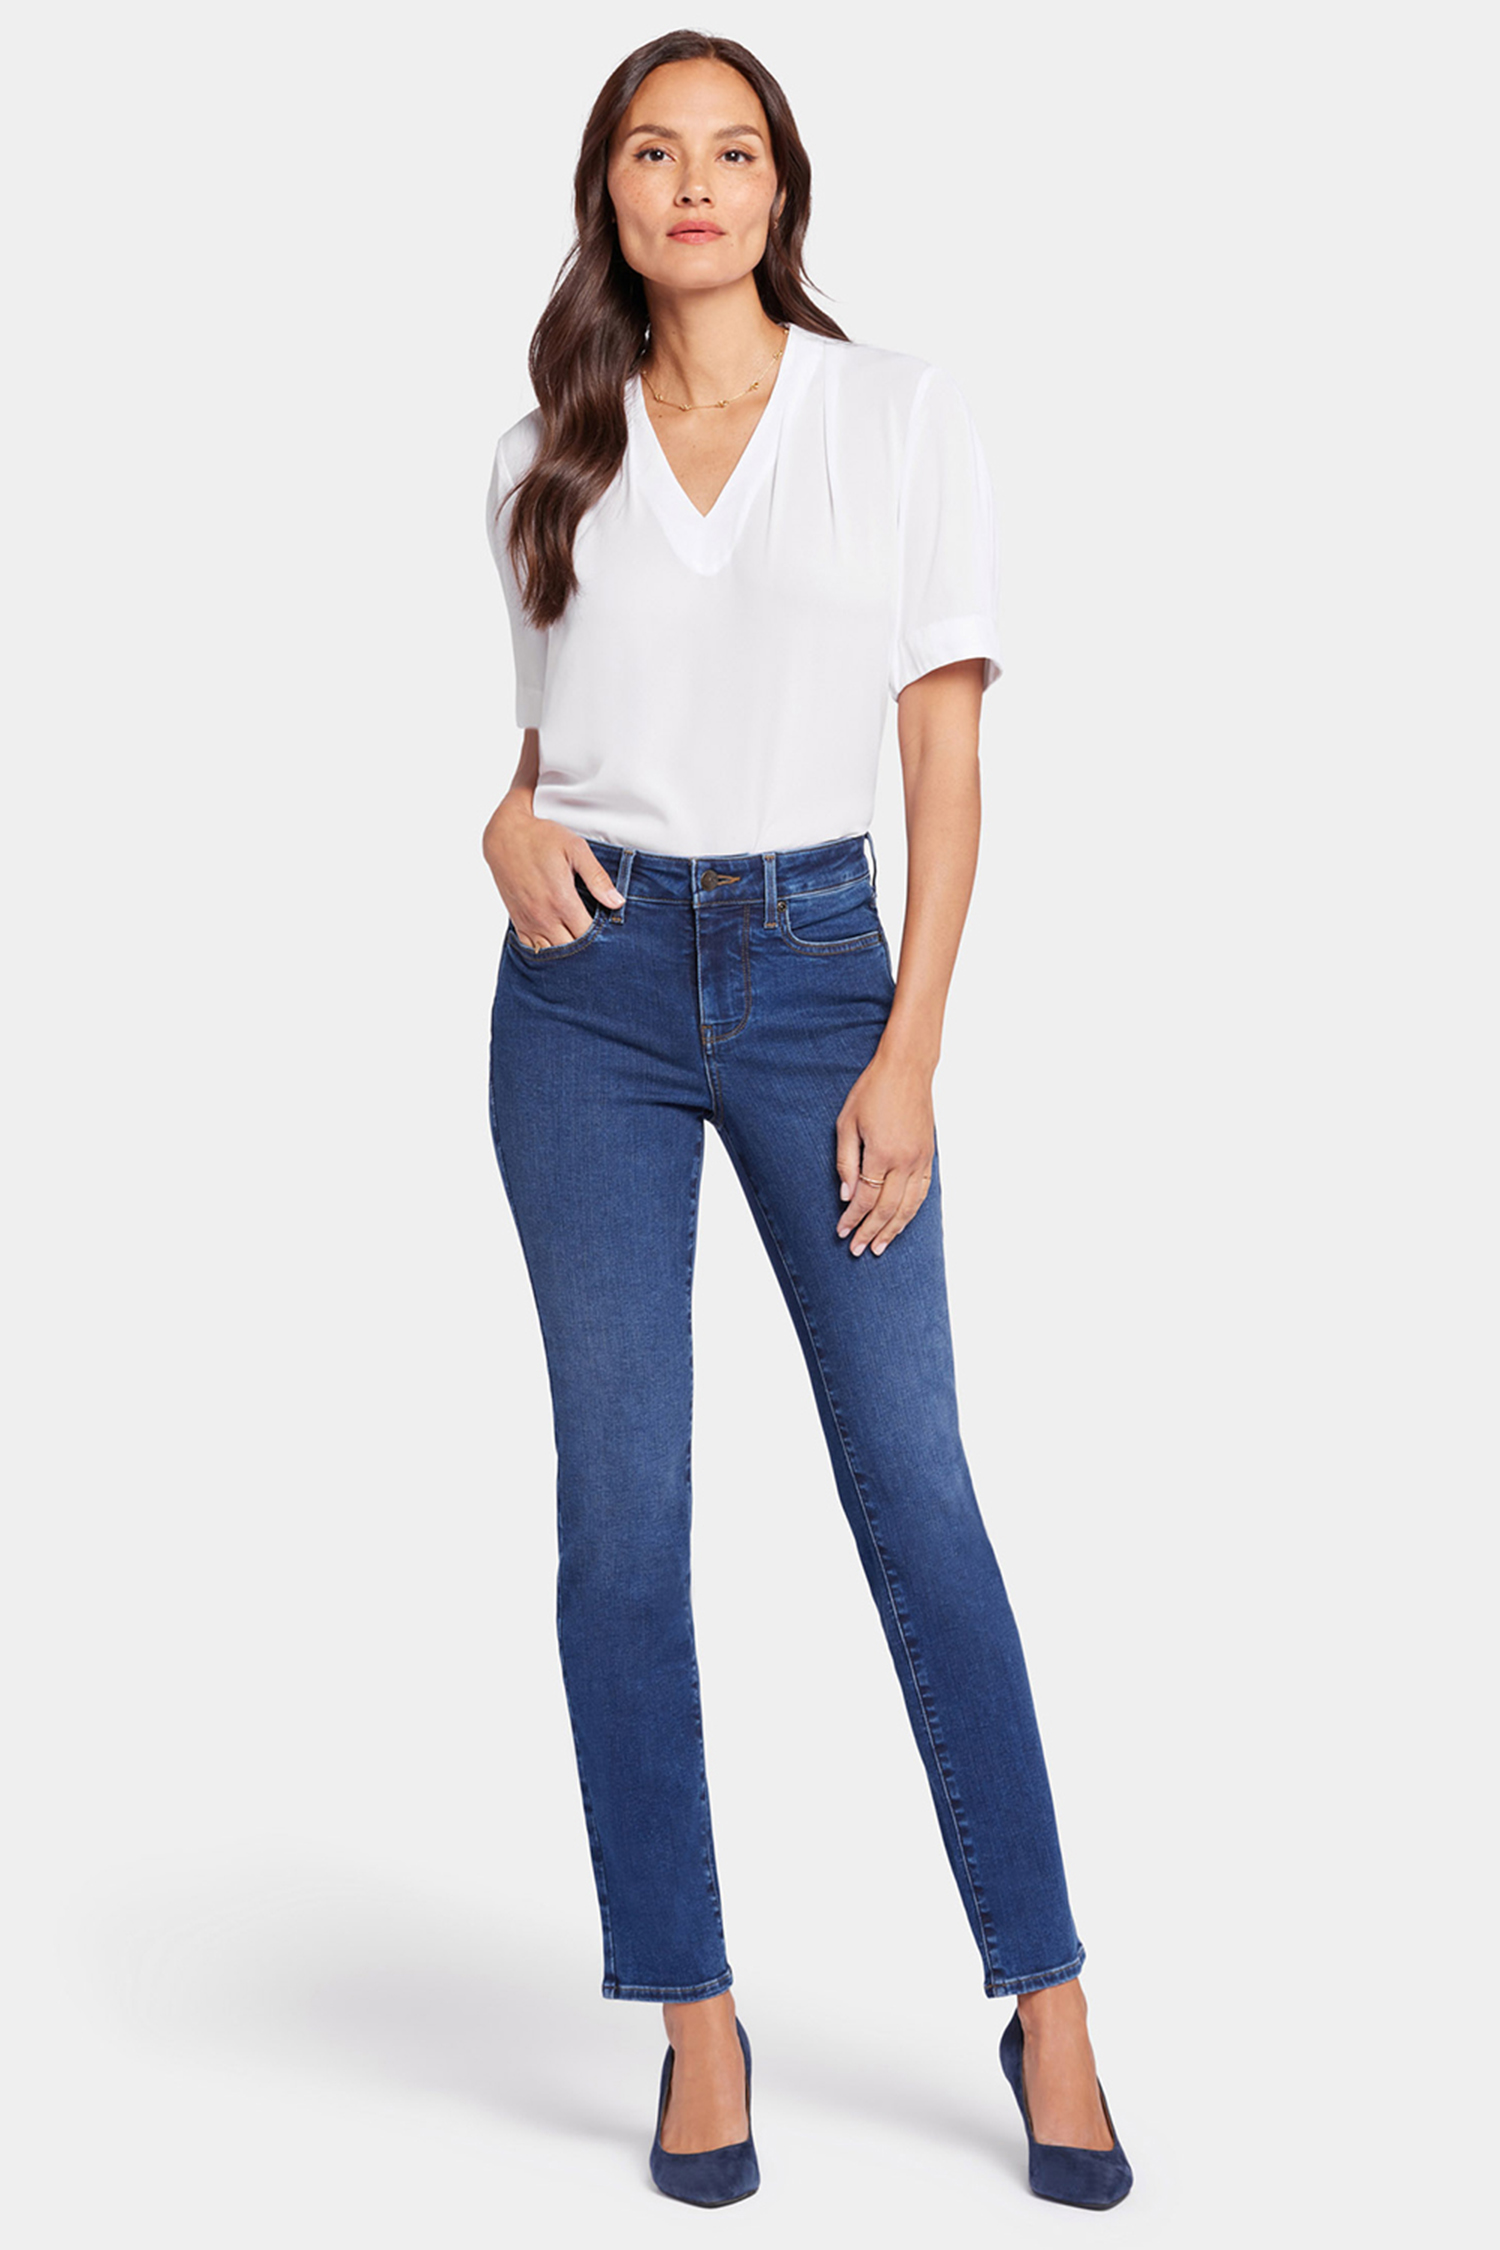 Buy Flare Jeans for Women Ladies Elastic Pull-On Skinny Flared Leg Pants  Bootcut Denim Jeggings, Medium Blue, XX-Large at